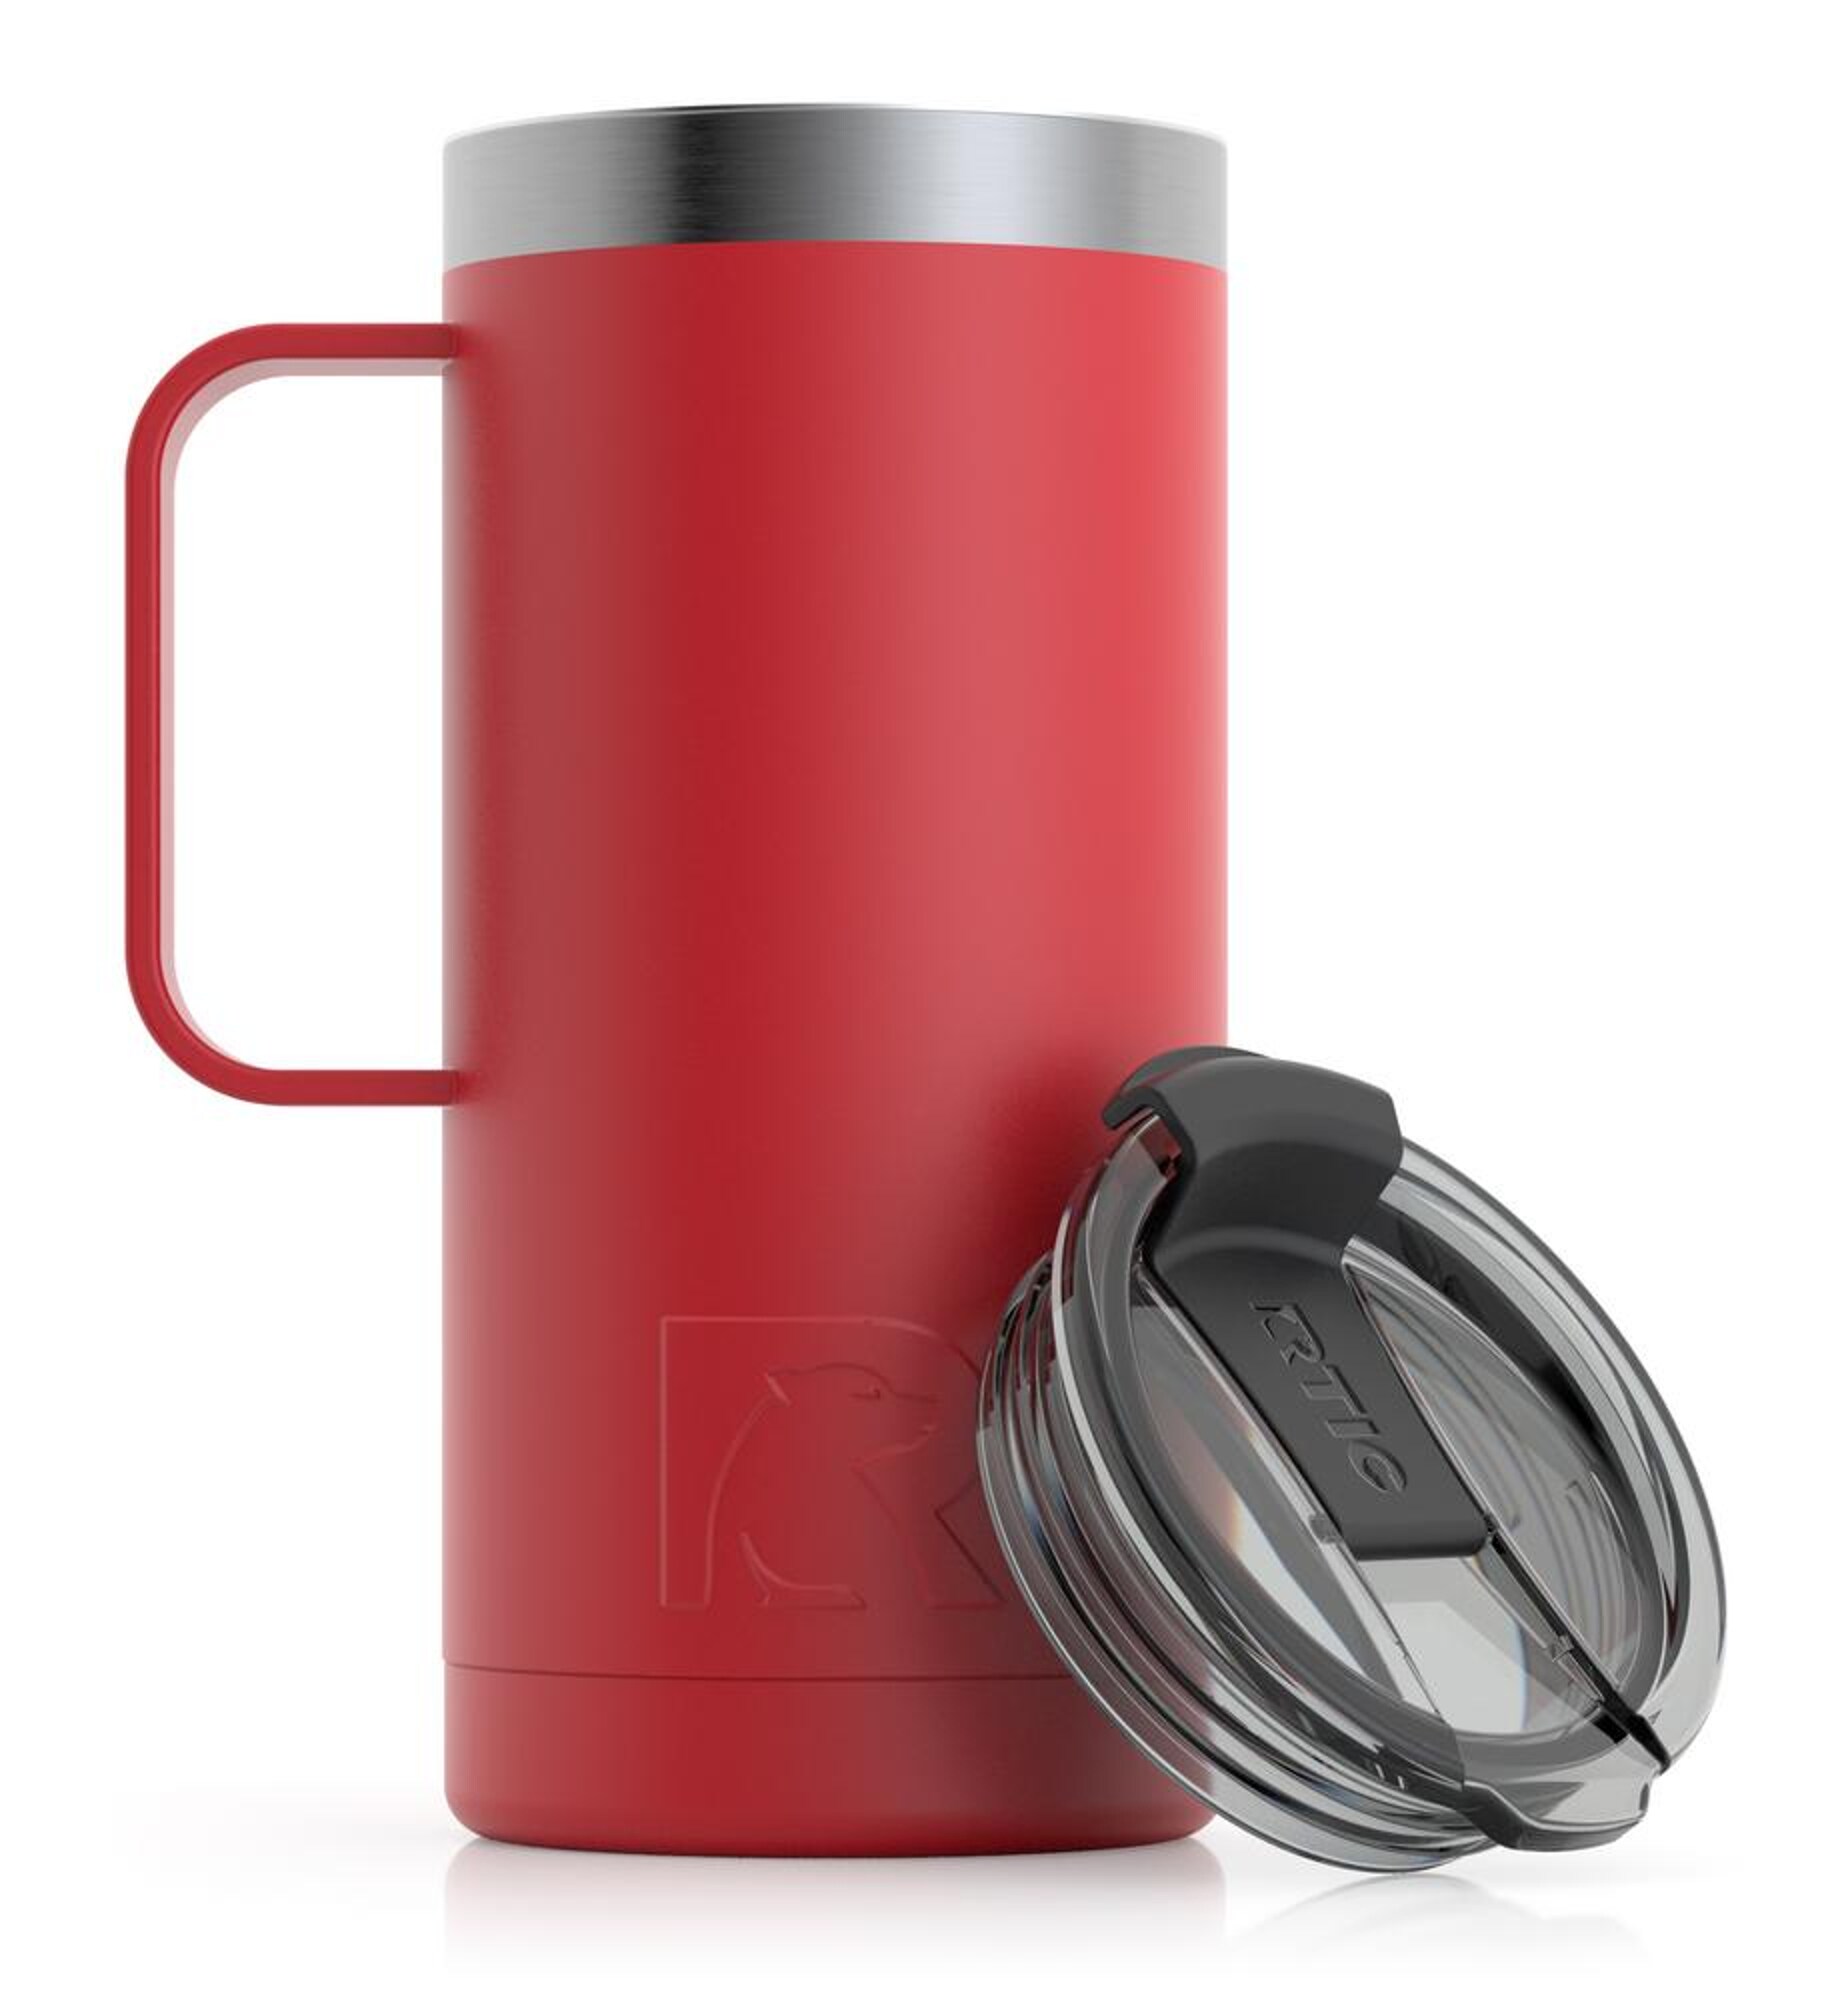 Rubbermaid Flip Lid Vacuum Insulated Travel Mug, 16 oz, Black